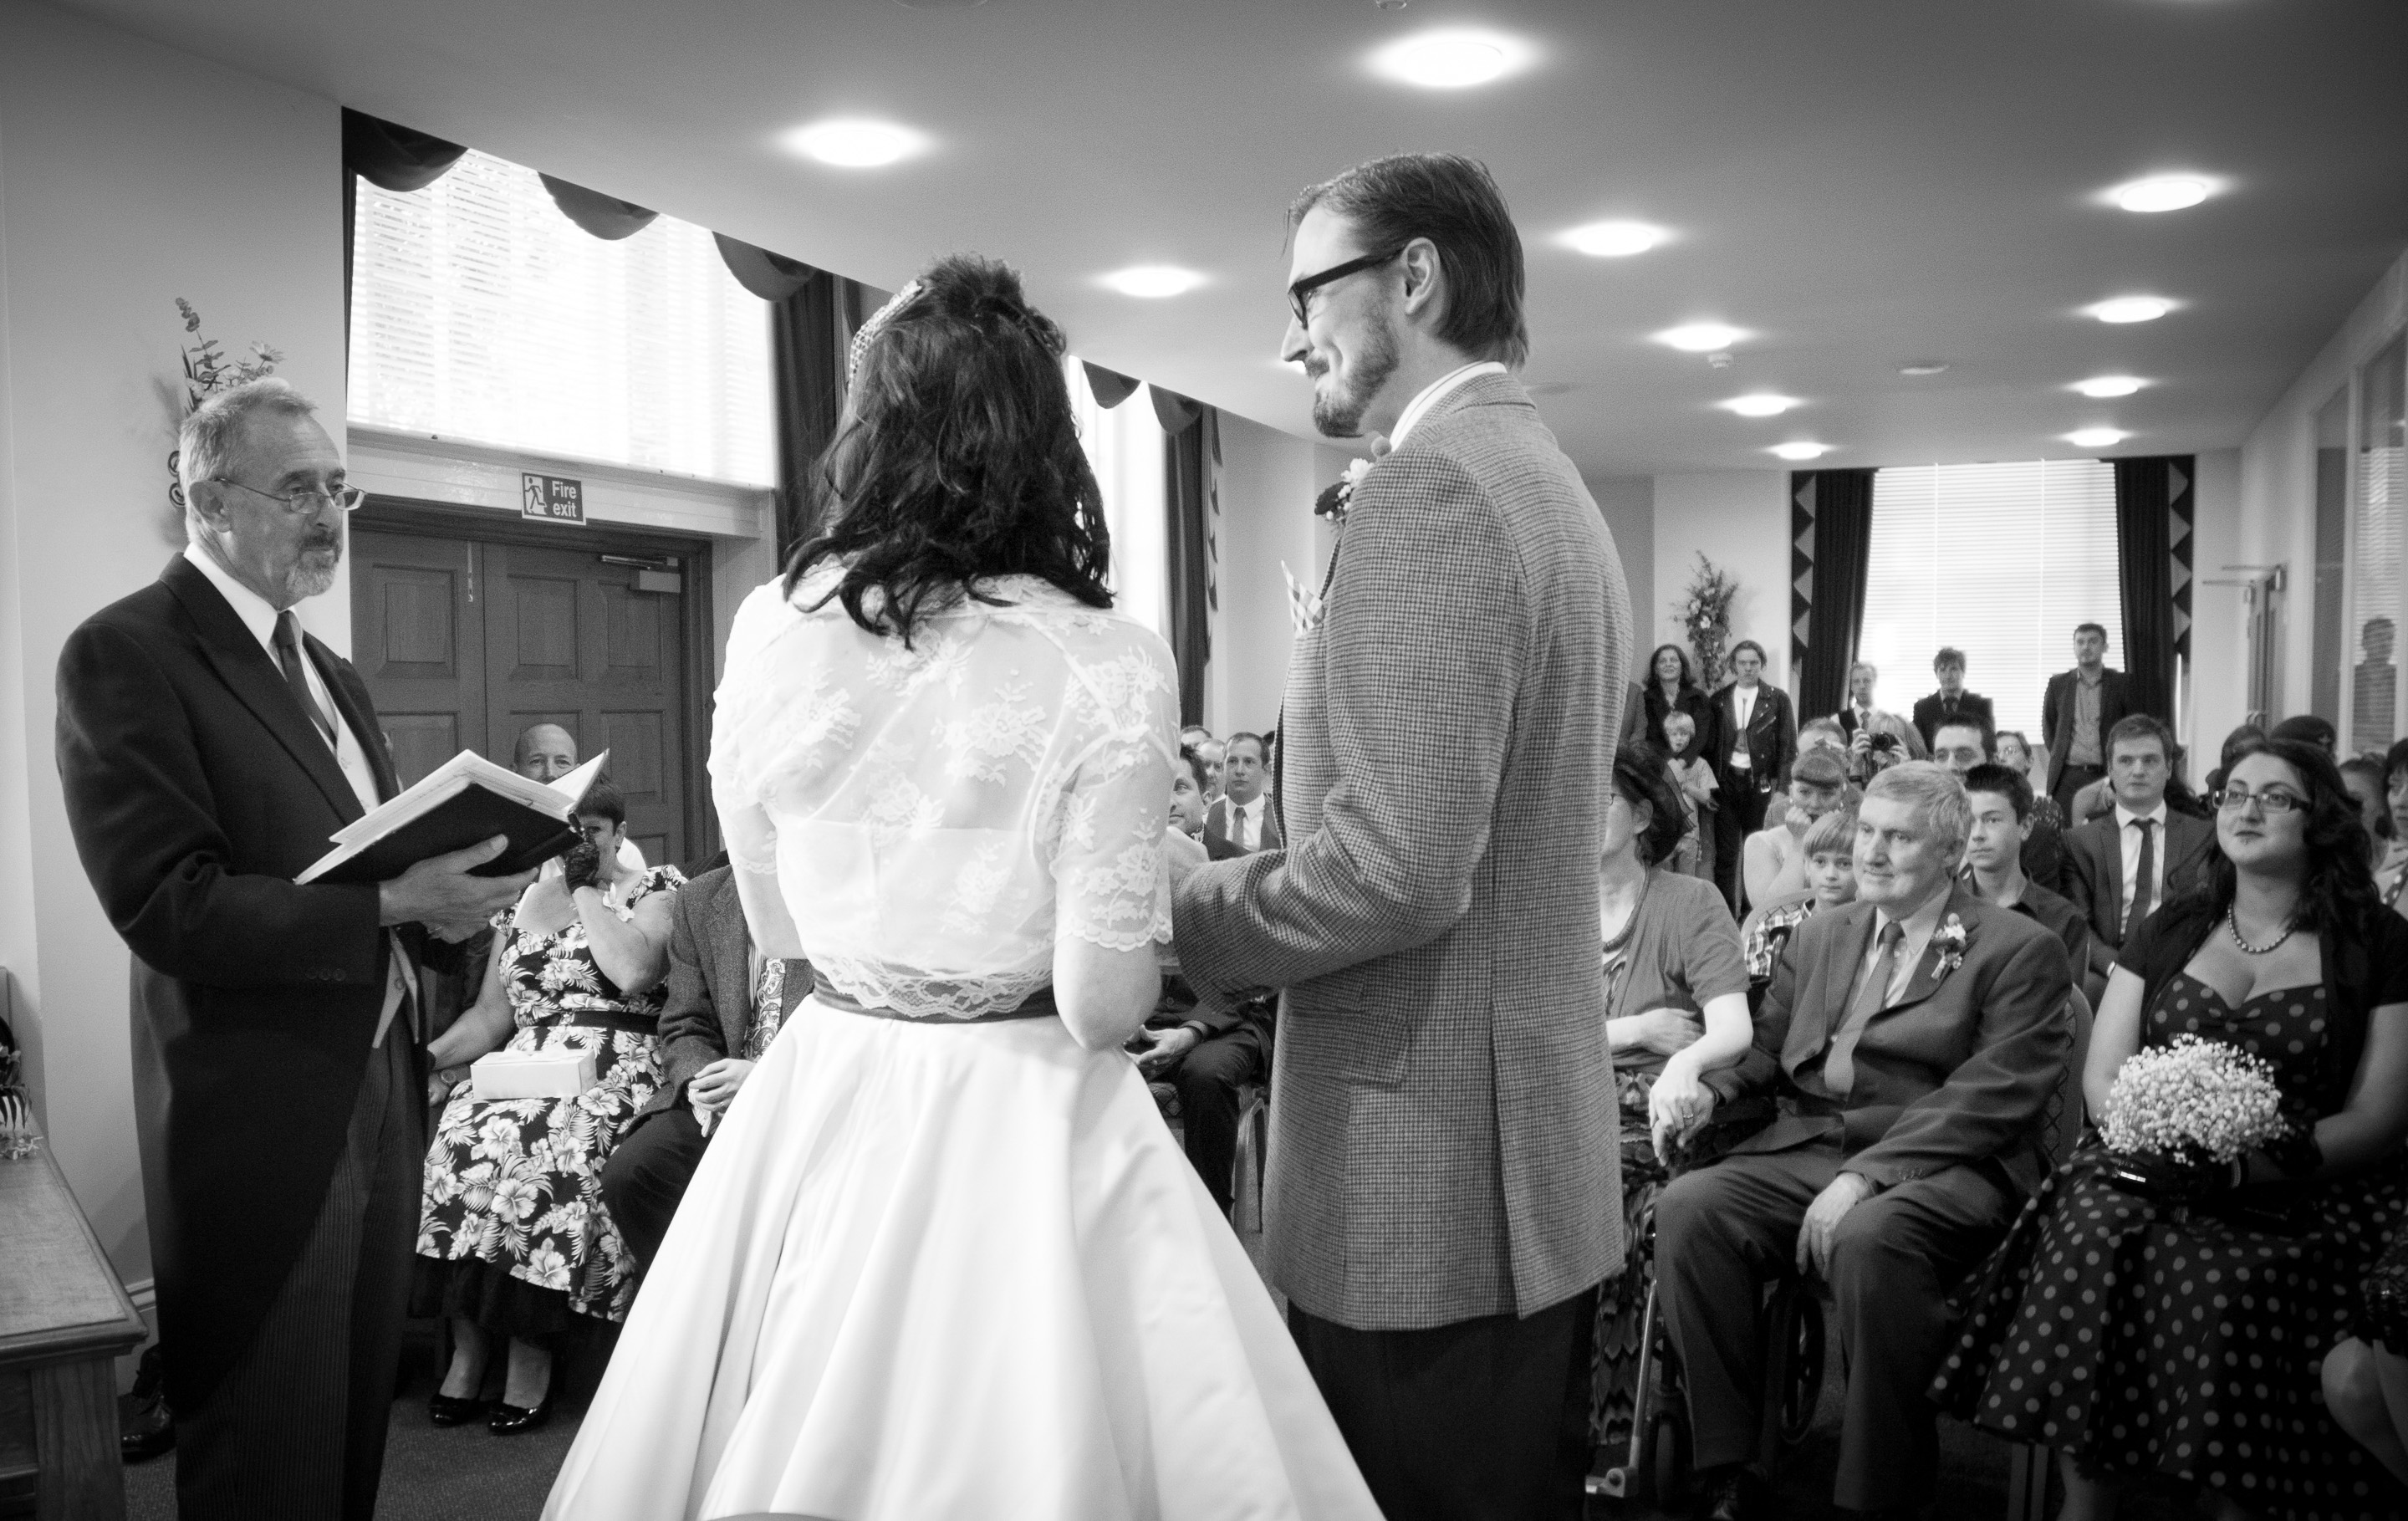 The vows, wedding photography, vintage kent wedding